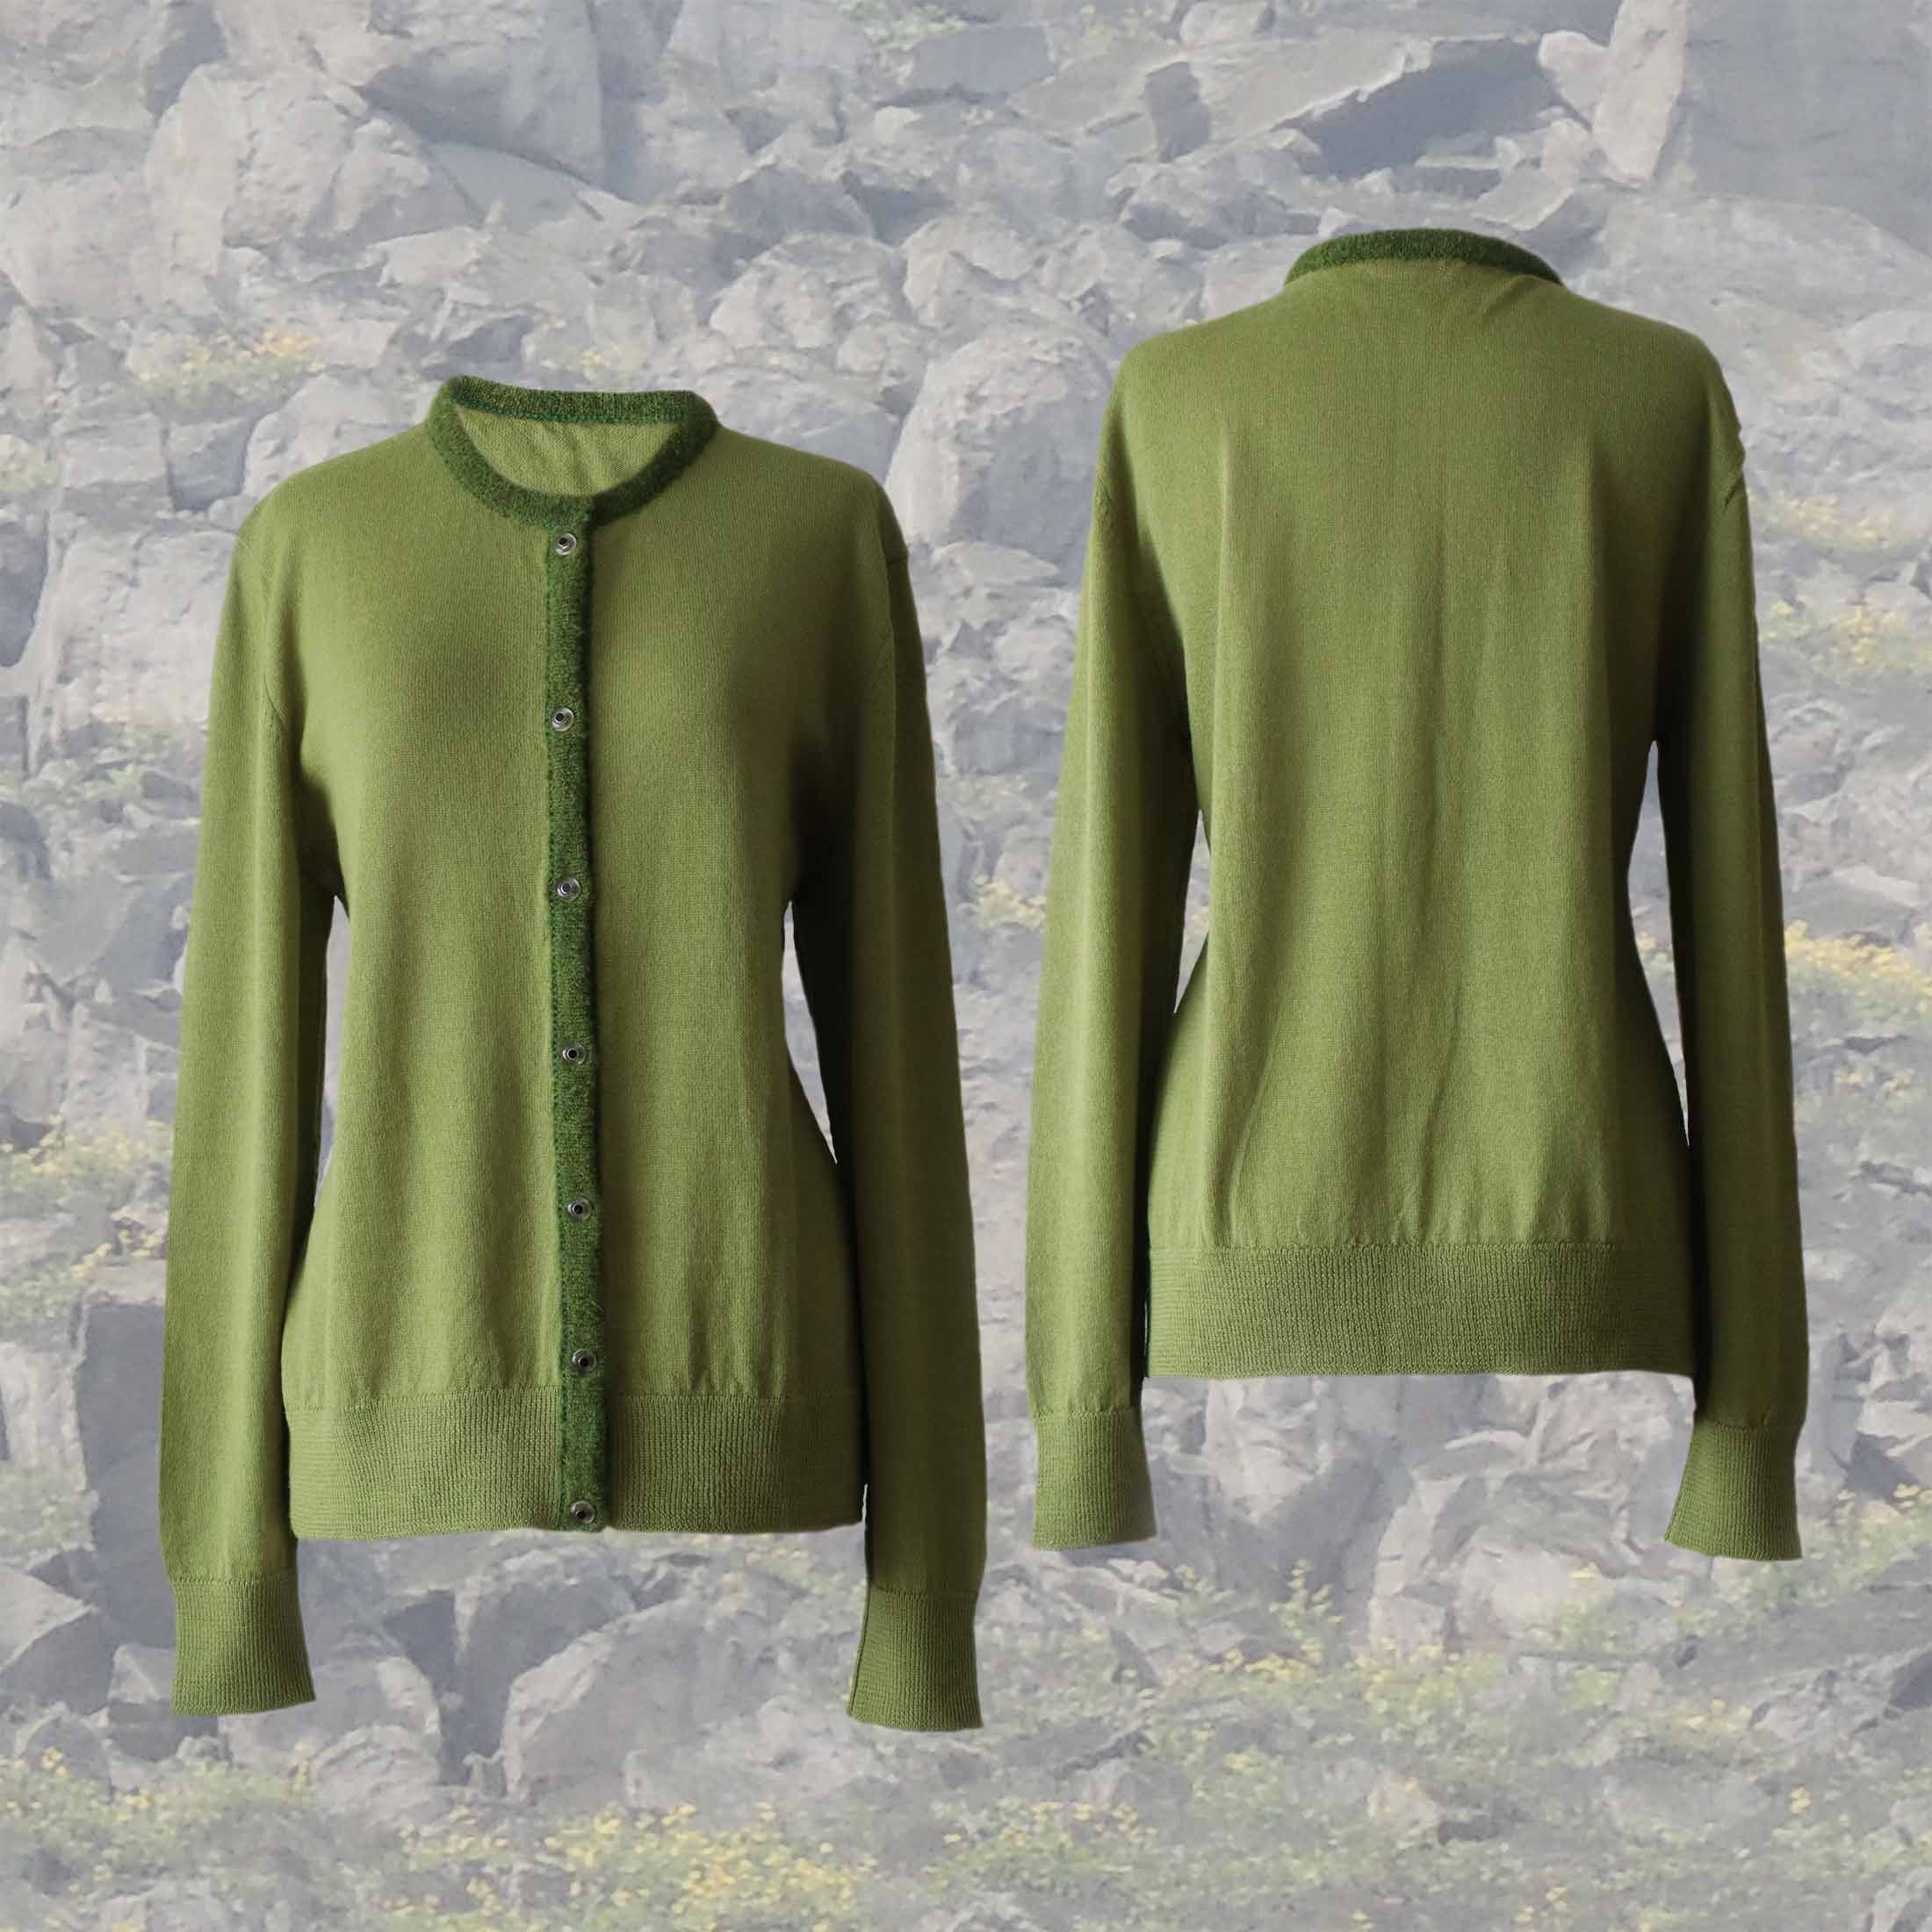 PFL Knitwear Cardigan baby alpaca, vest baby alpaca with button closure and crew neck color green.